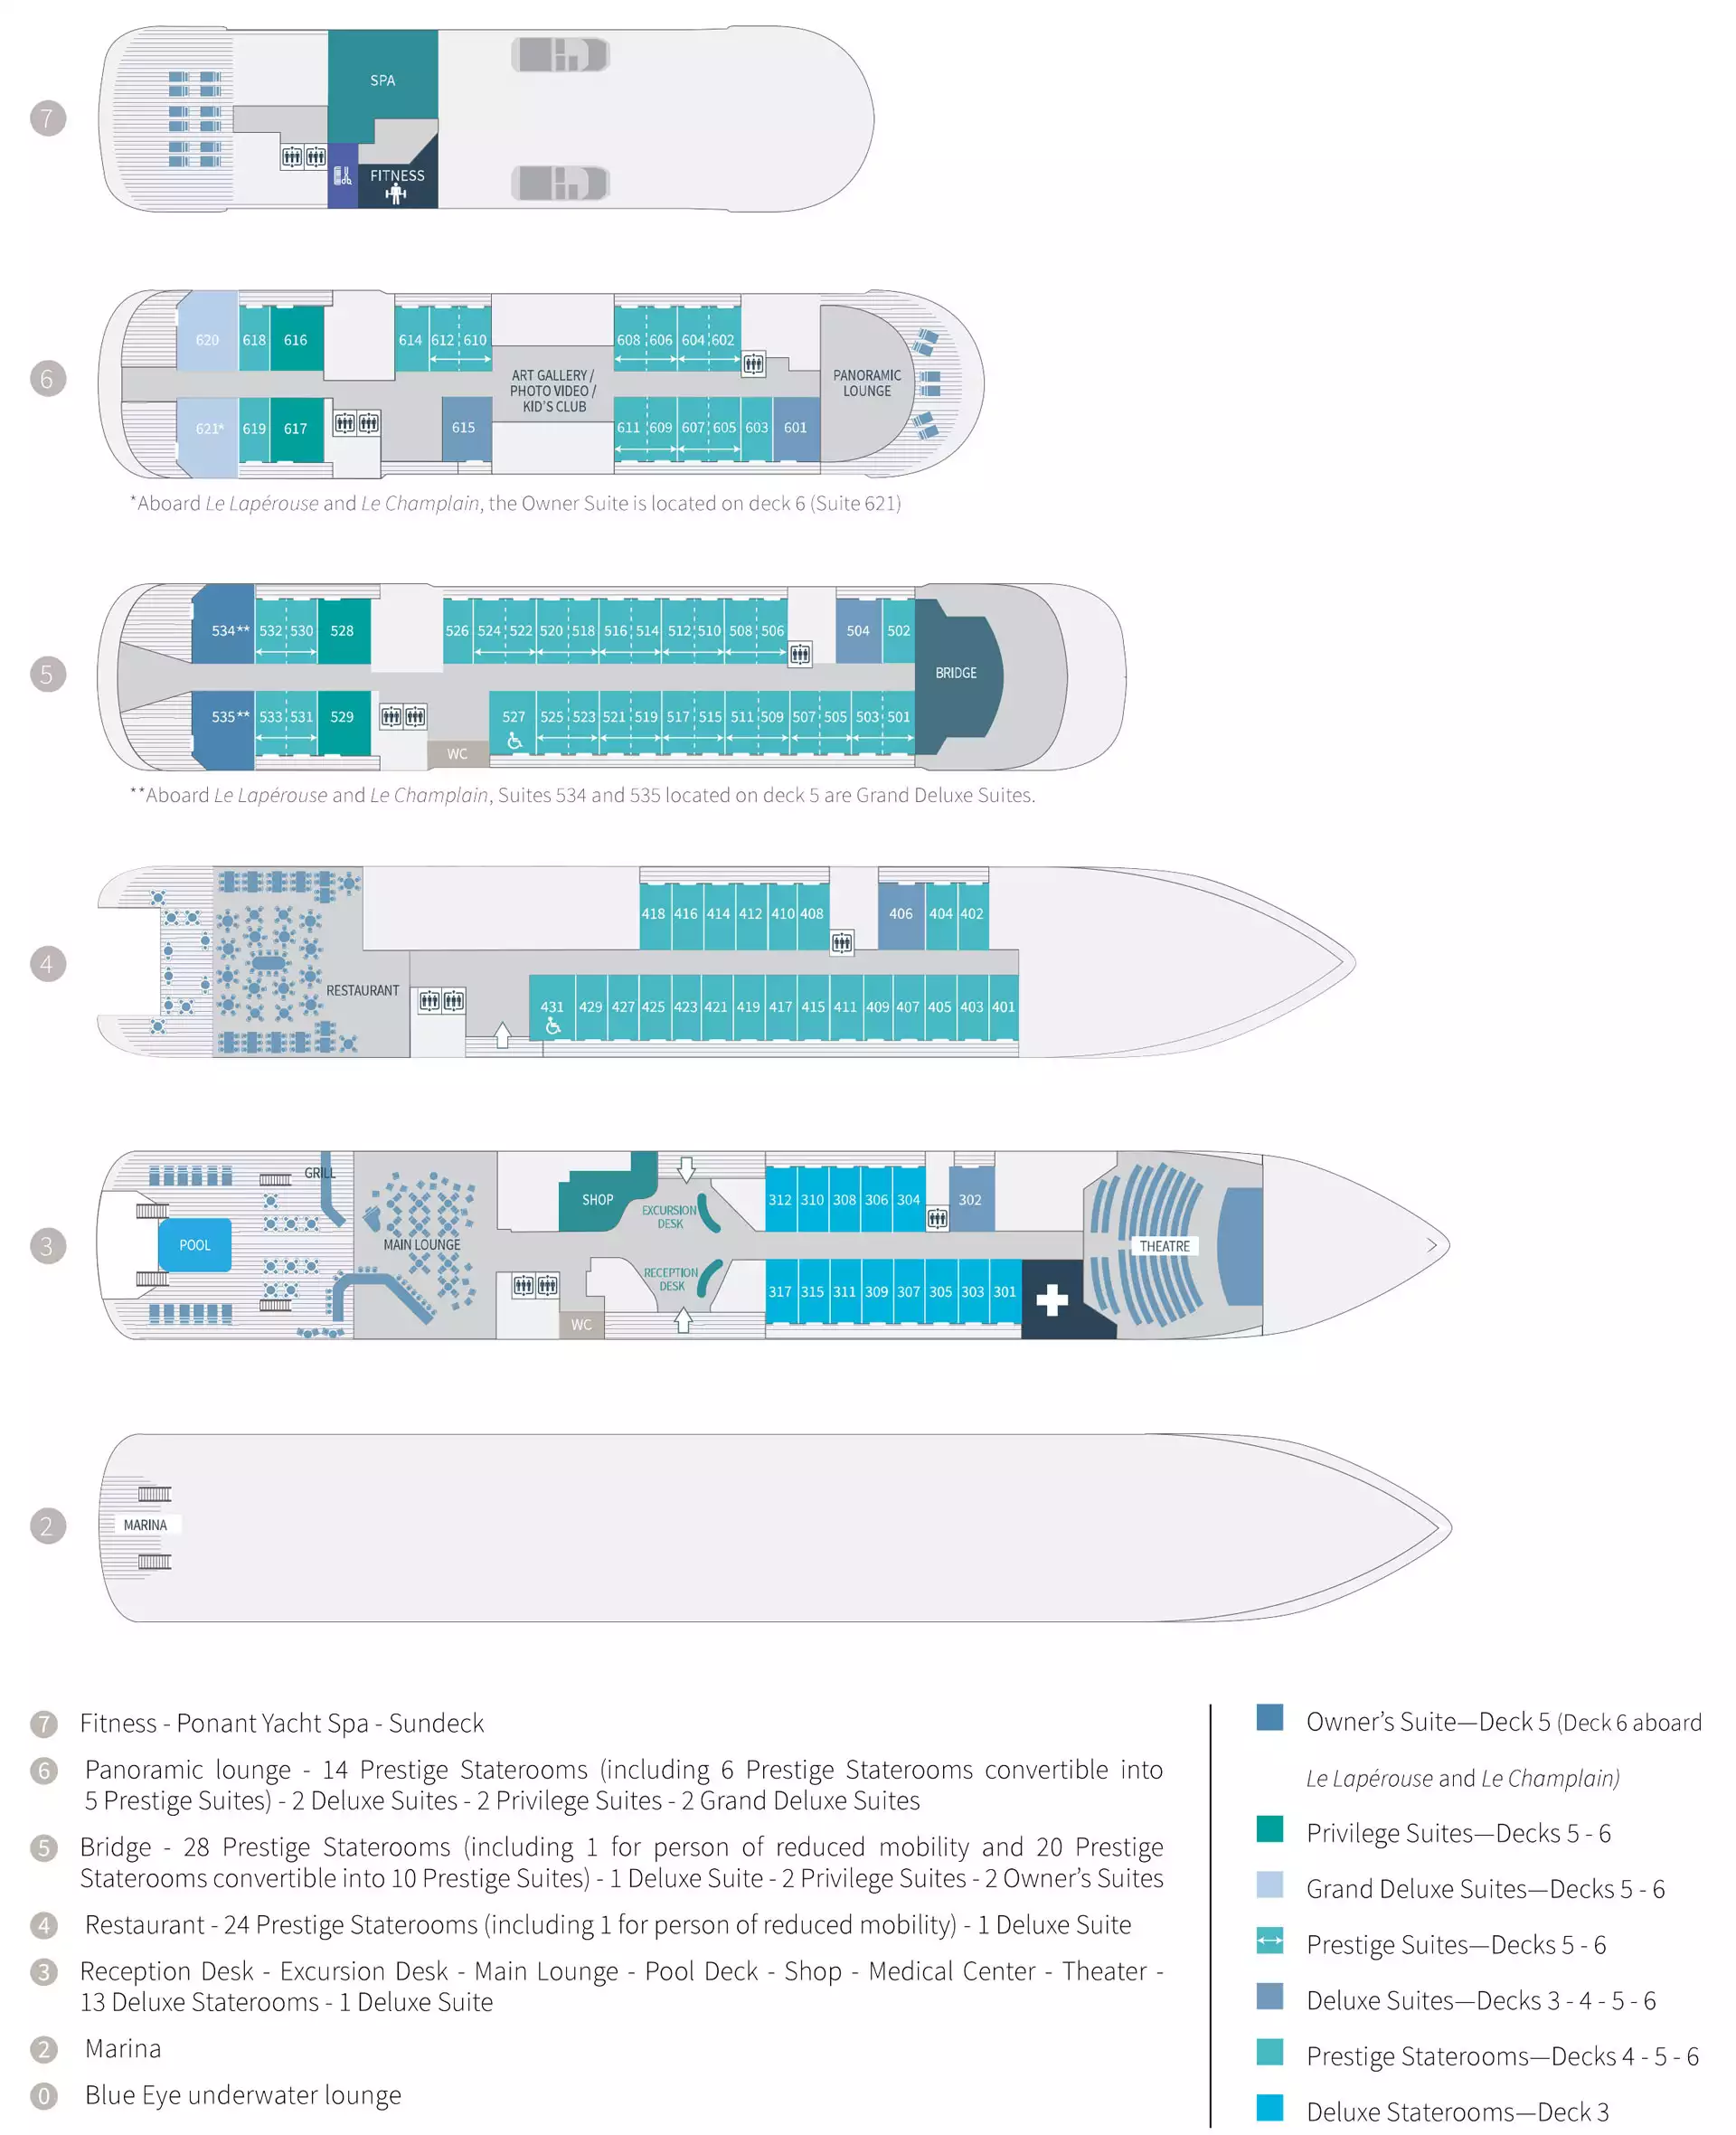 Deck plan of 184-guest Le Bougainville ship, showing 4 passenger decks with 88 staterooms & 4 suites.